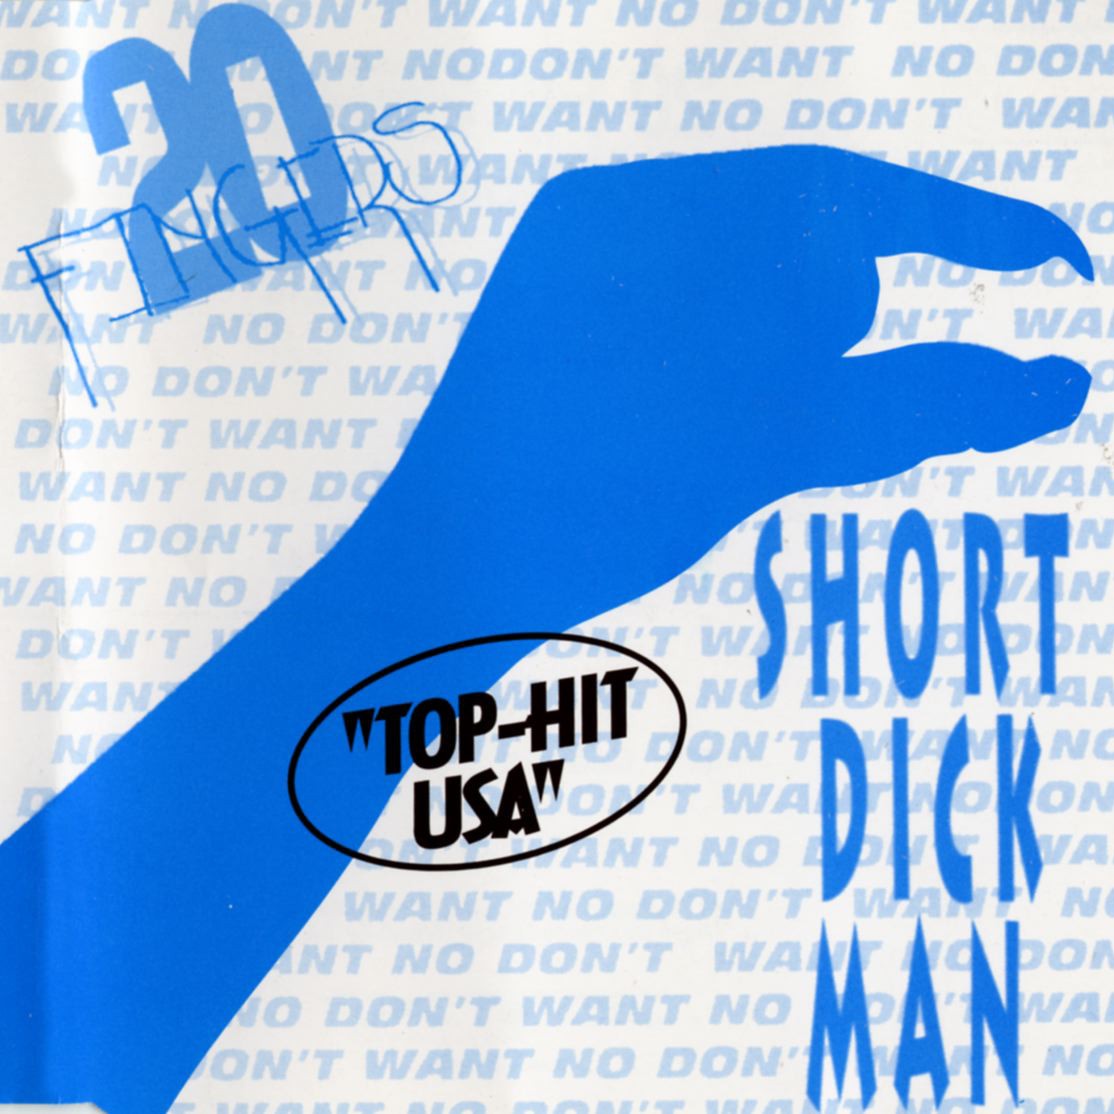 Short Dick Man (Unity 3 Bip Remix)